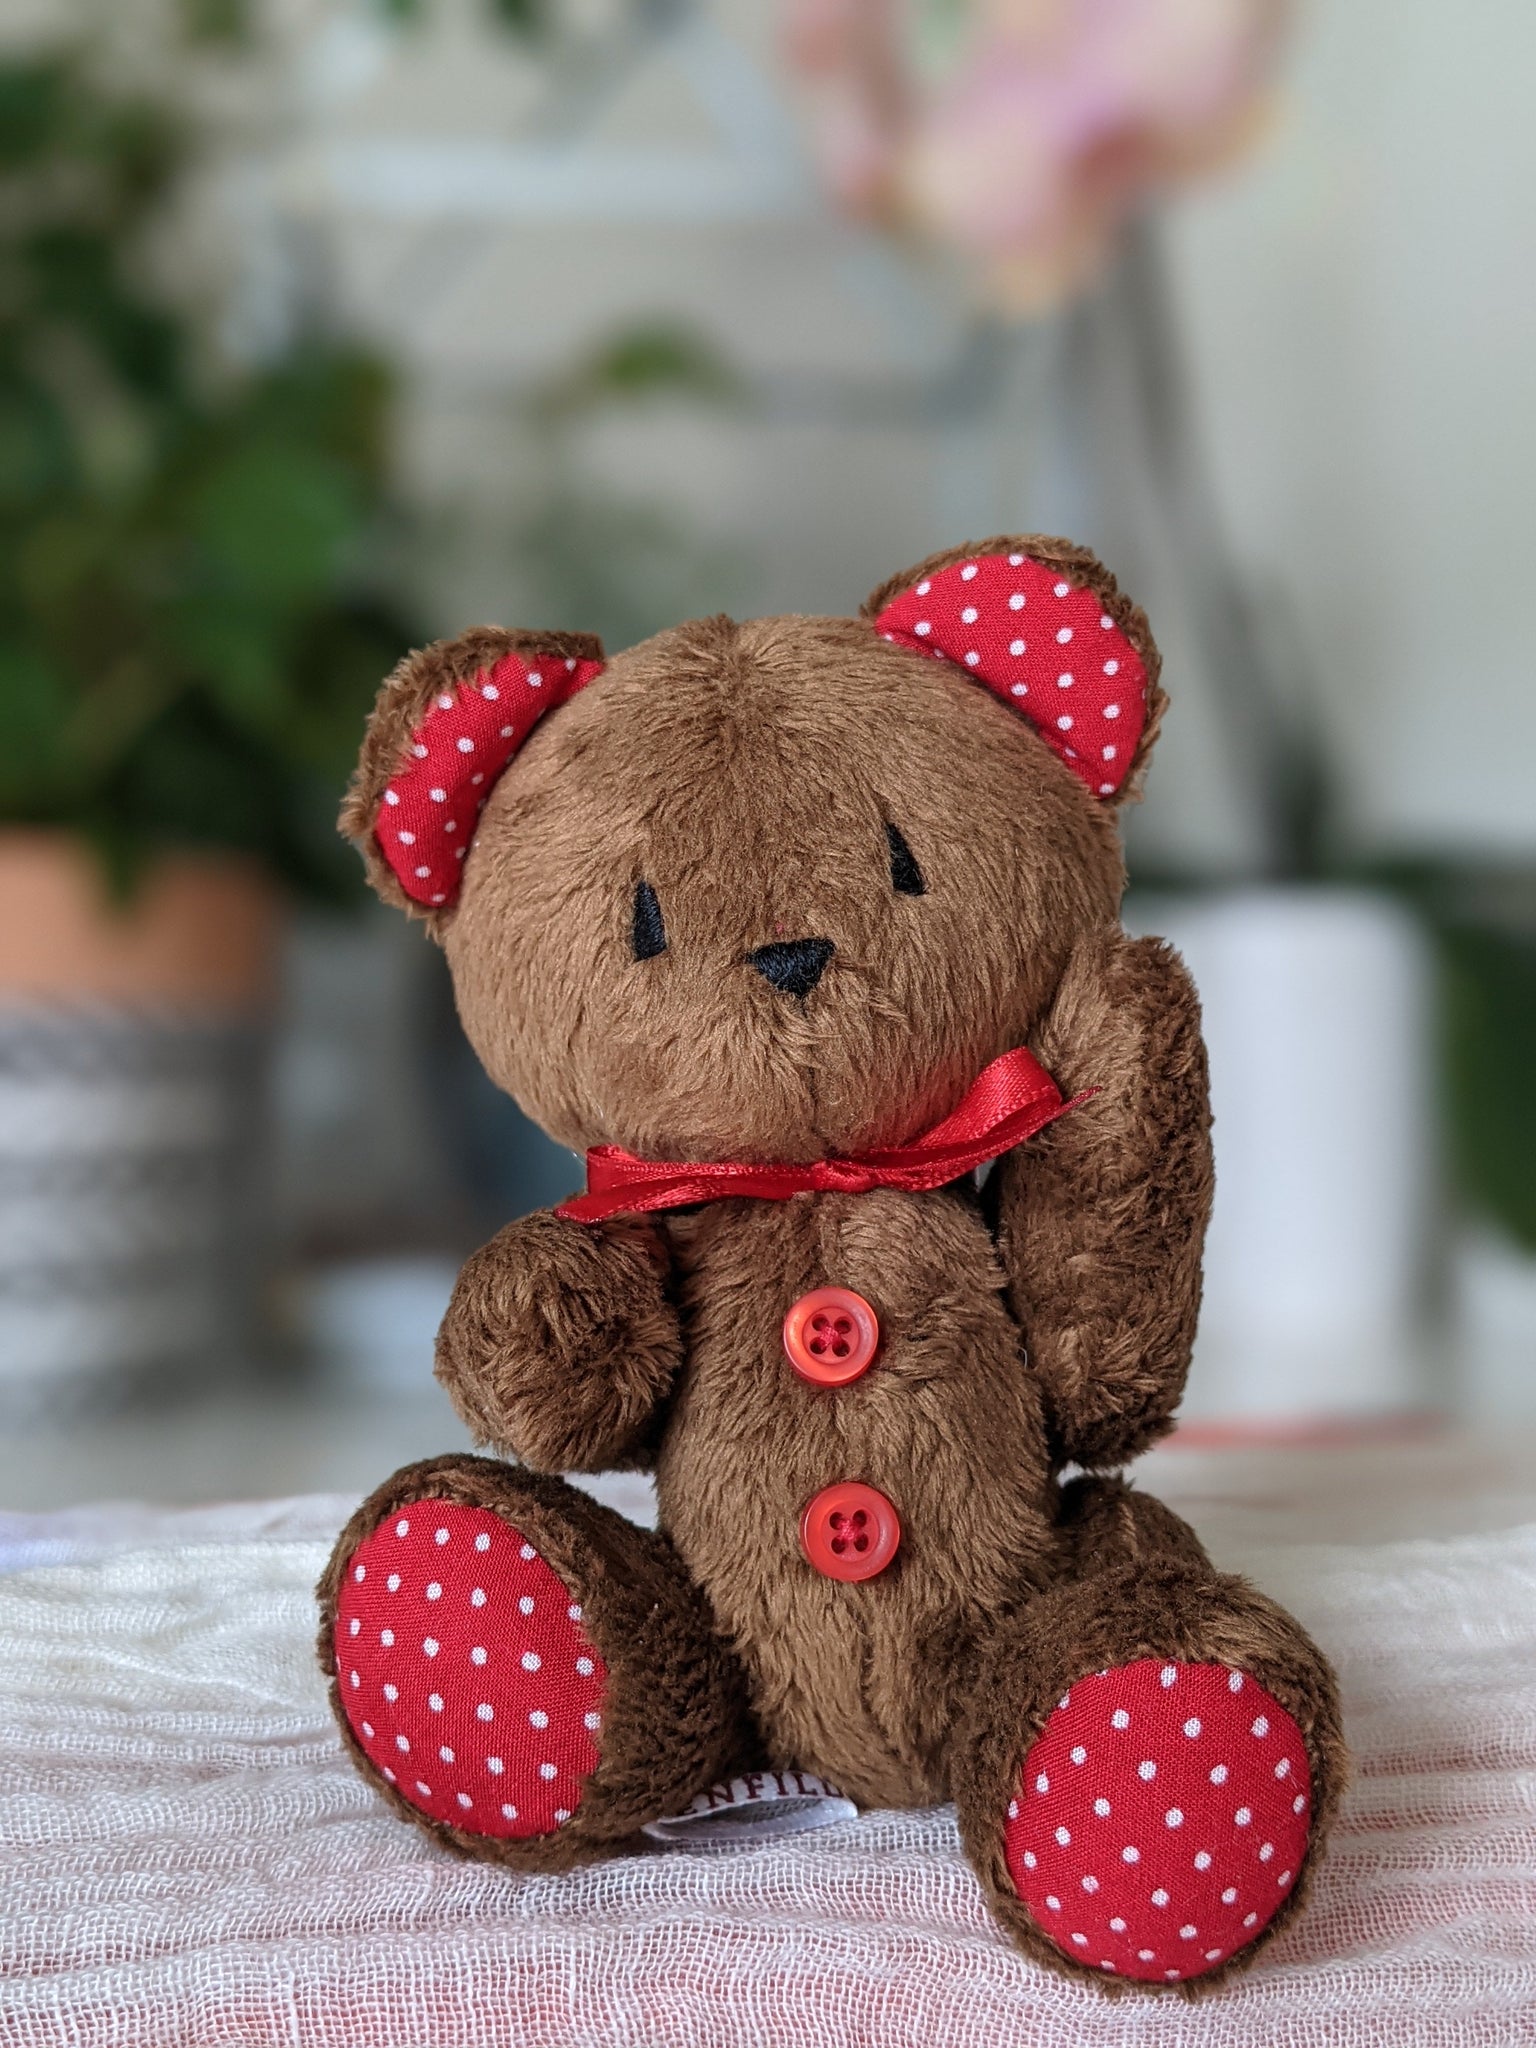 Teddy bear in dark brown